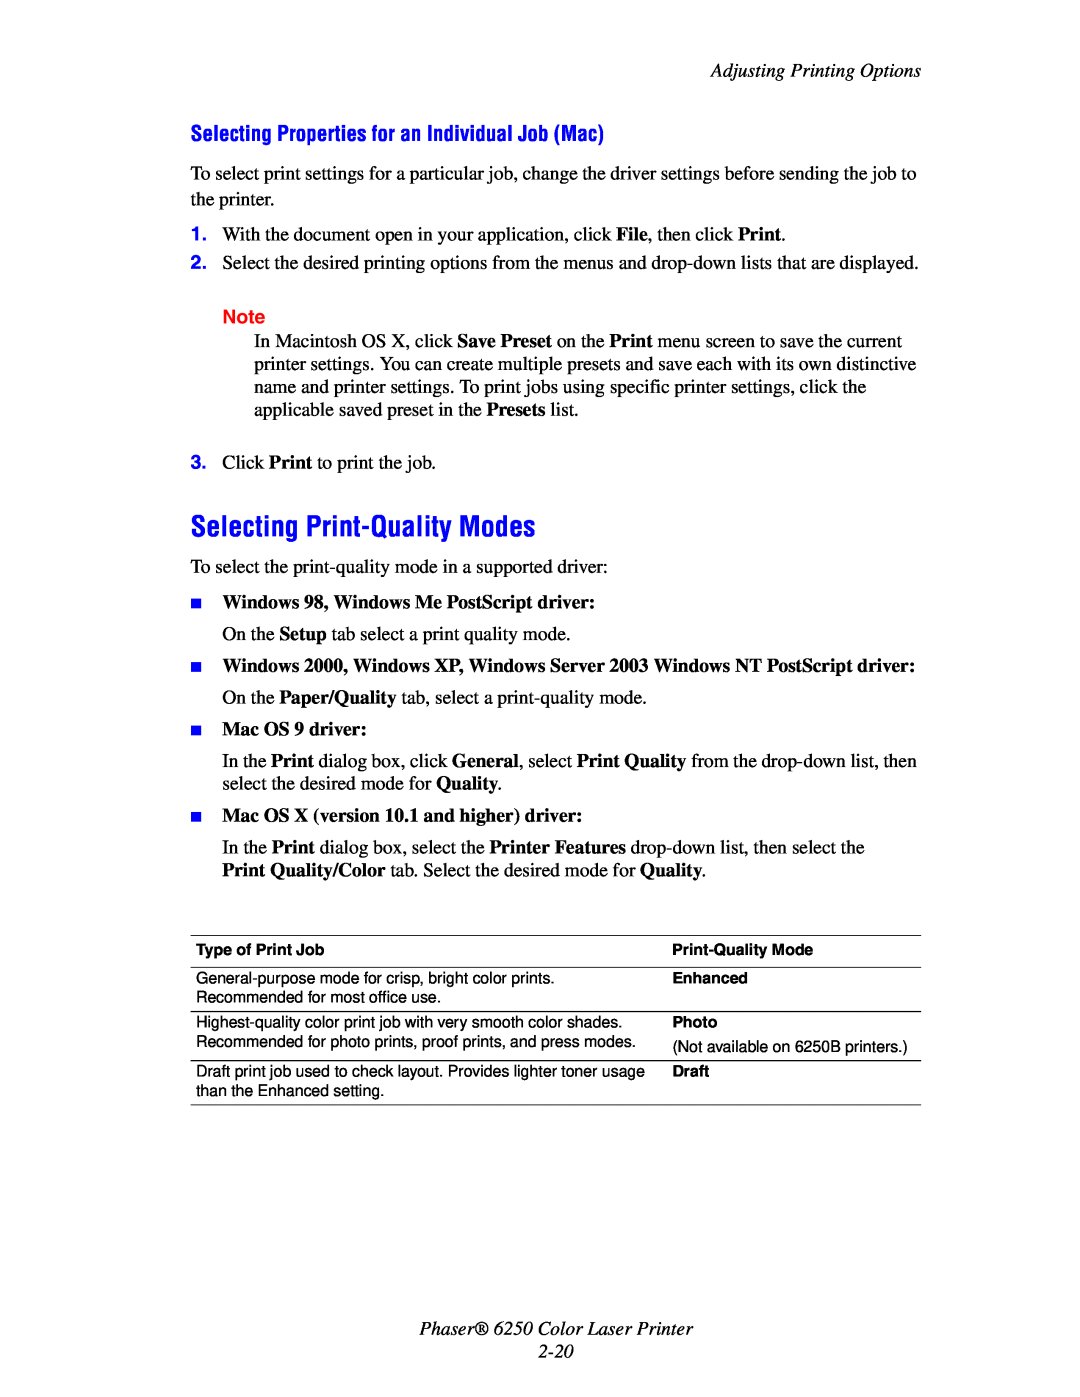 Xerox 6250 manual Selecting Print-Quality Modes, Selecting Properties for an Individual Job Mac, Mac OS 9 driver 